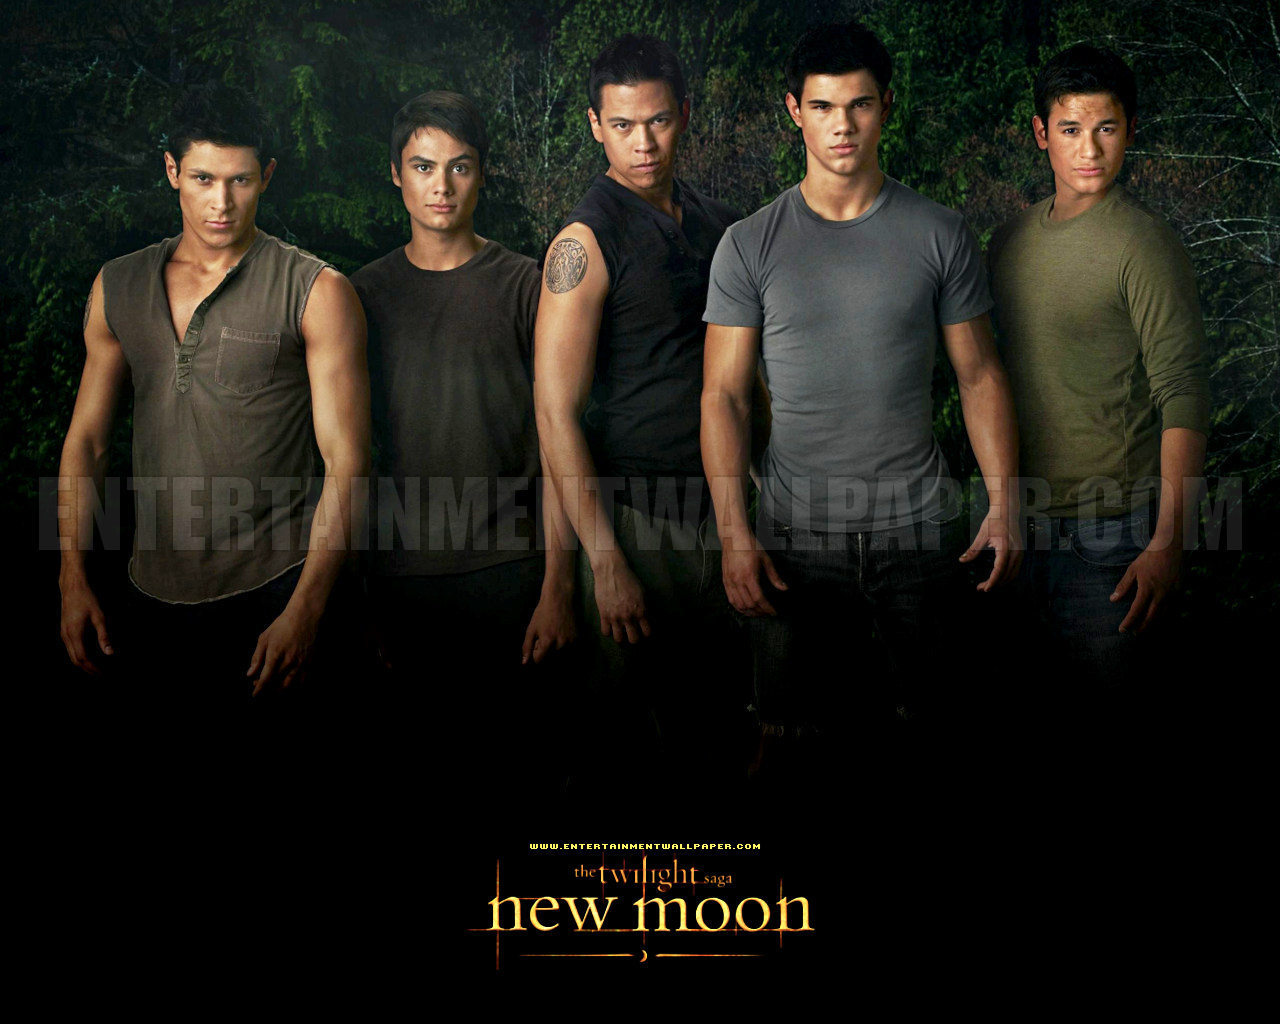 New Moon Movie Image Wallpaper